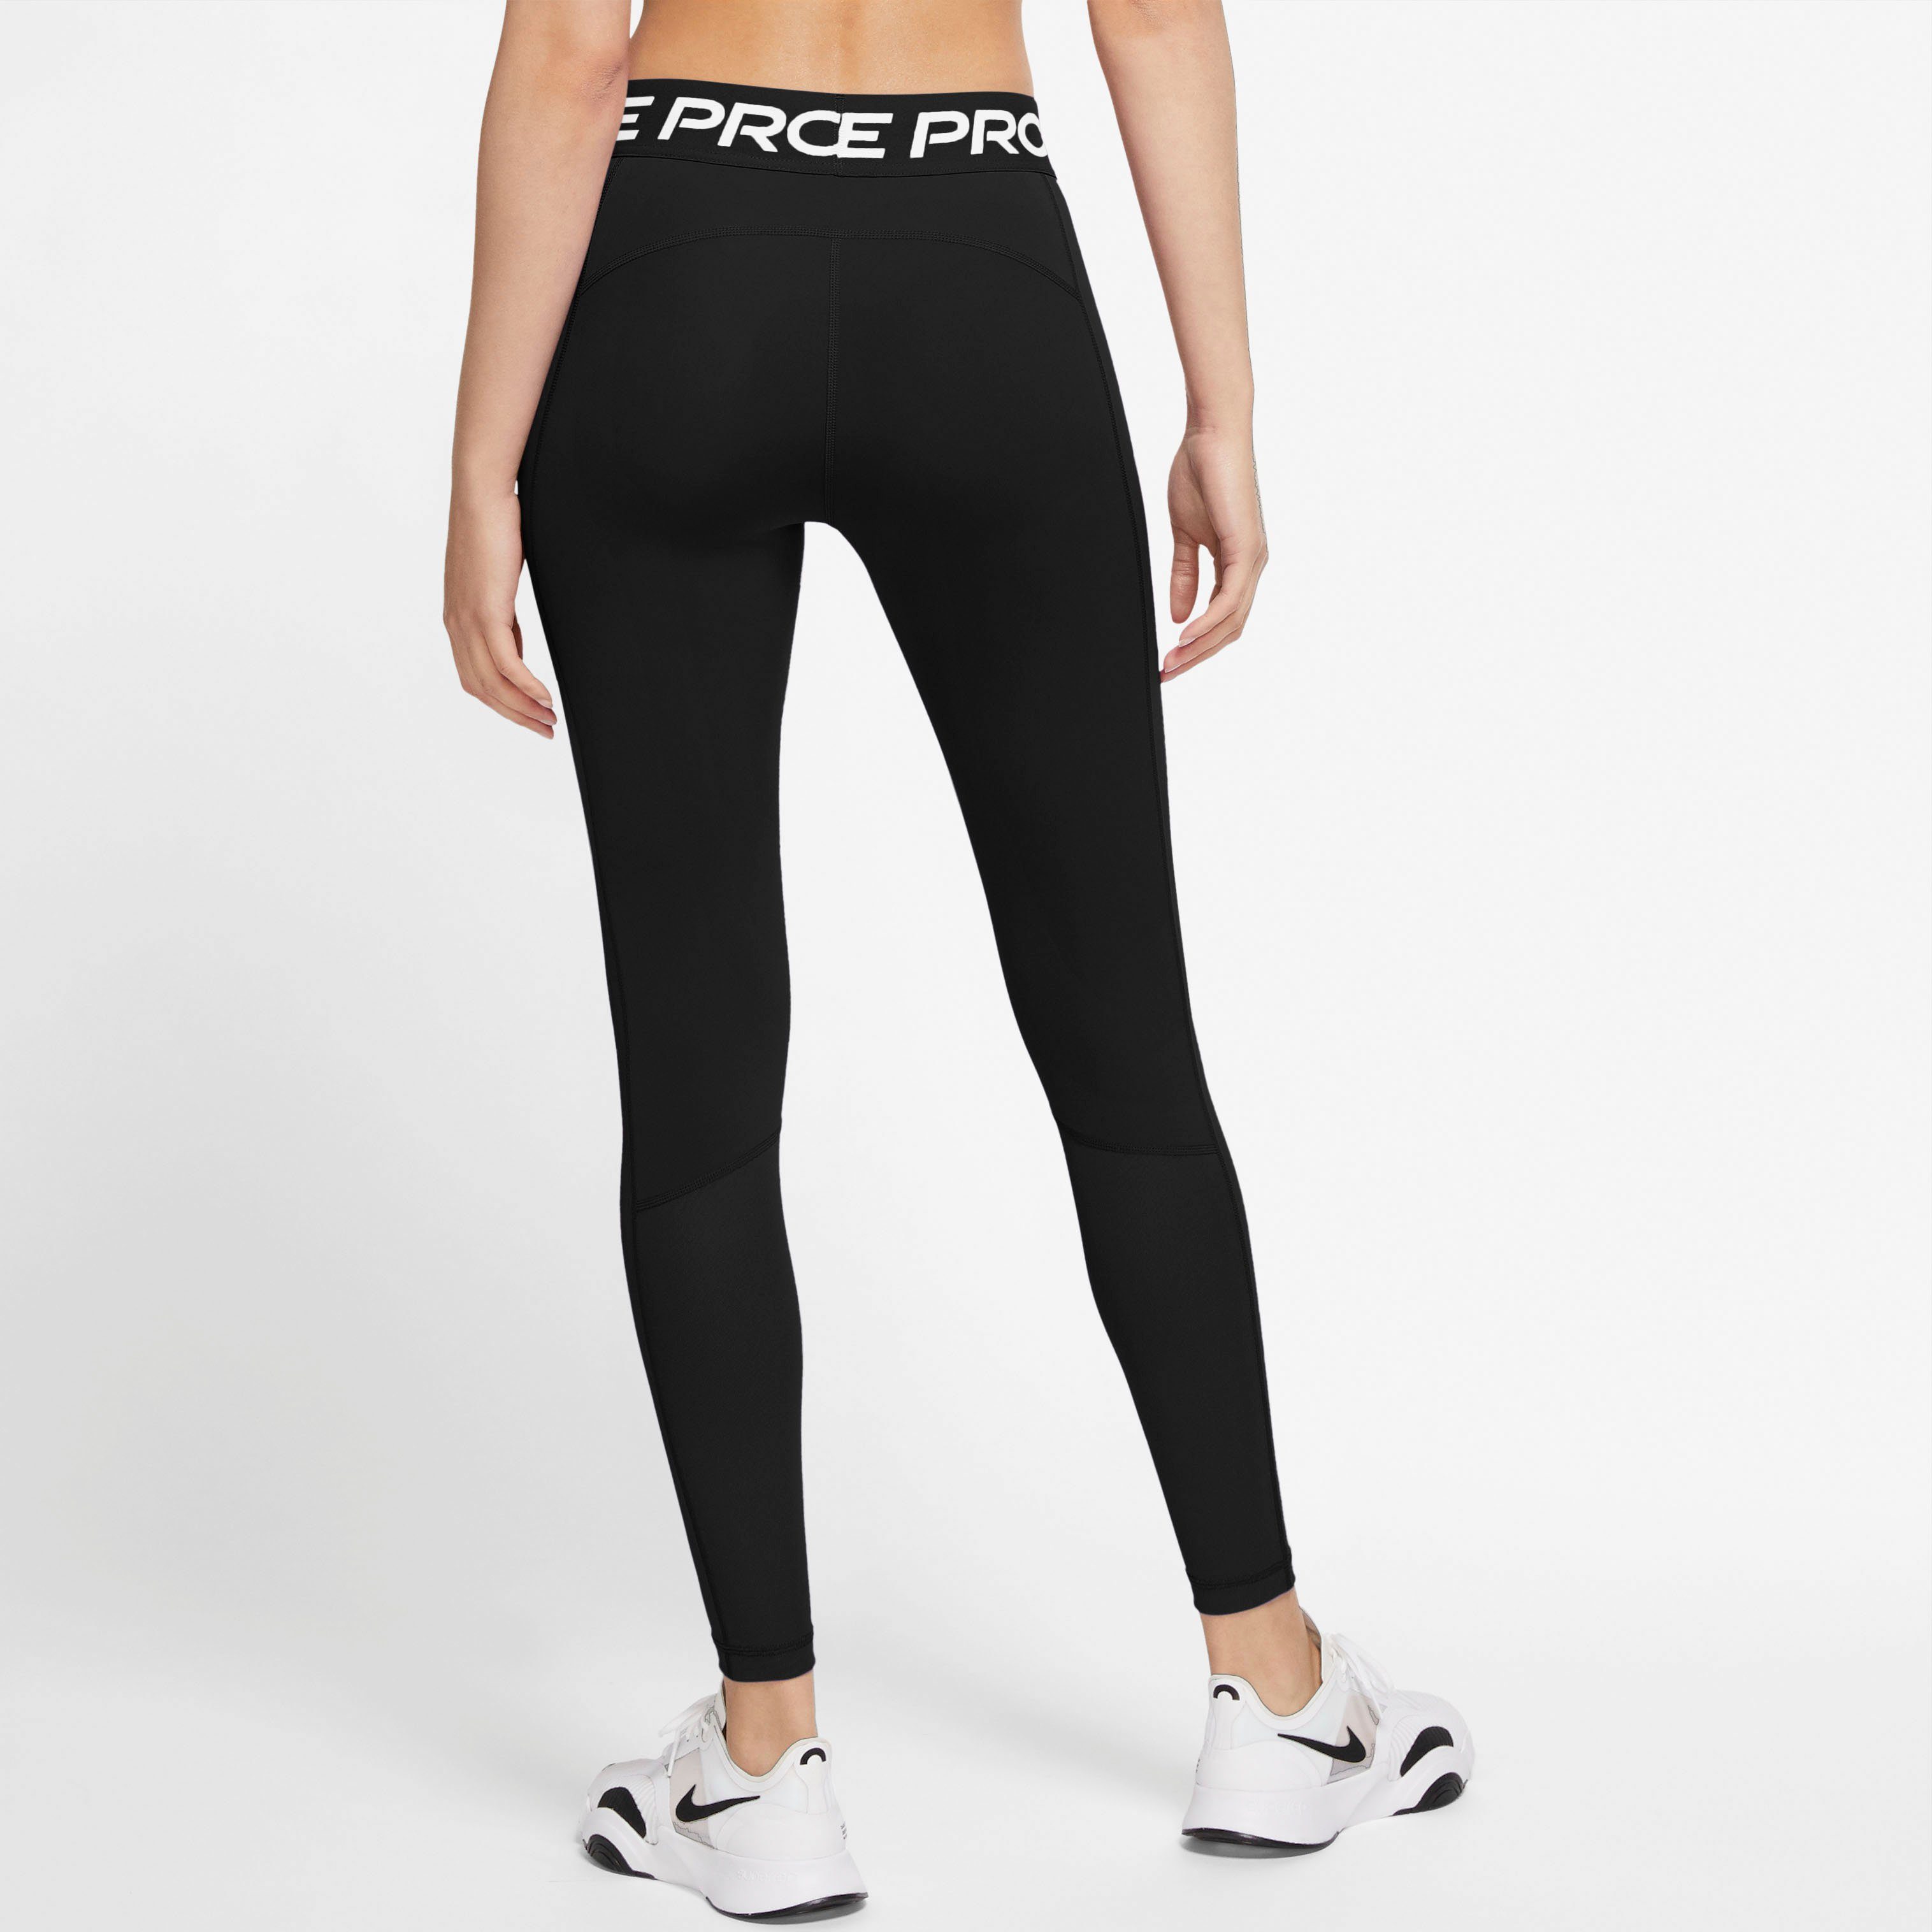 Nike PRO MESH-PANELED schwarz MID-RISE LEGGINGS WOMEN'S Trainingstights